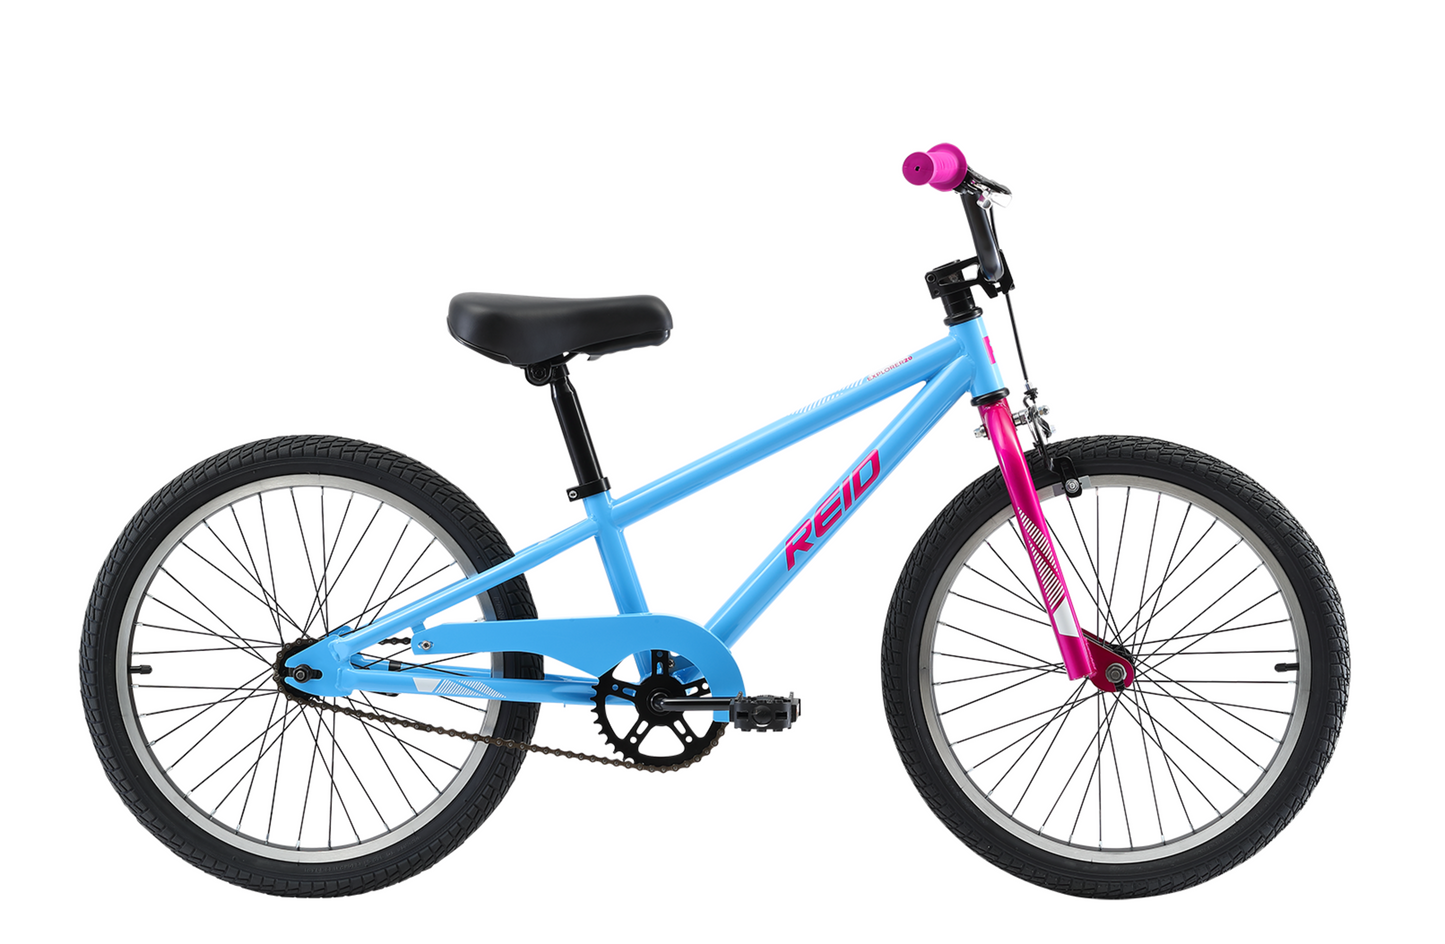 Explorer S 20" Kids Bike in baby blue showing BMX style bike frame from Reid Cycles Australia 